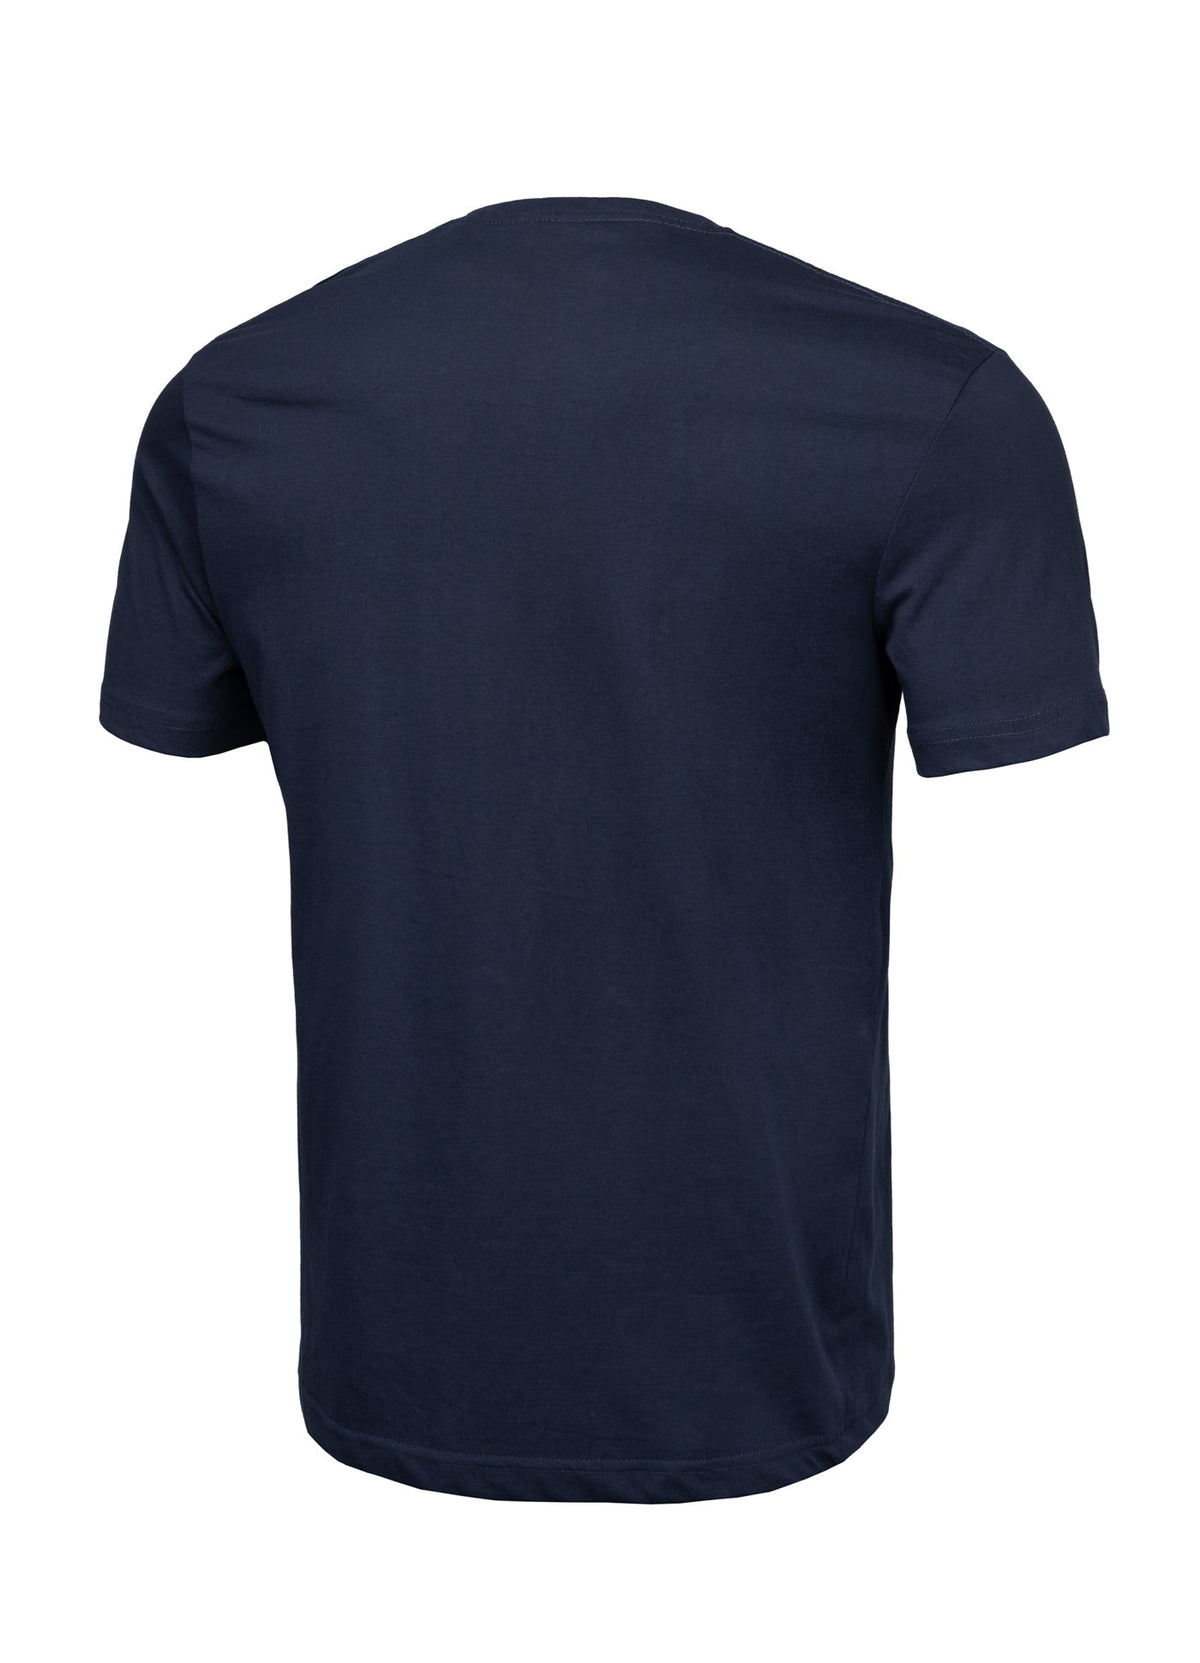 PITBULL USA Lightweight Dark Navy T-shirt